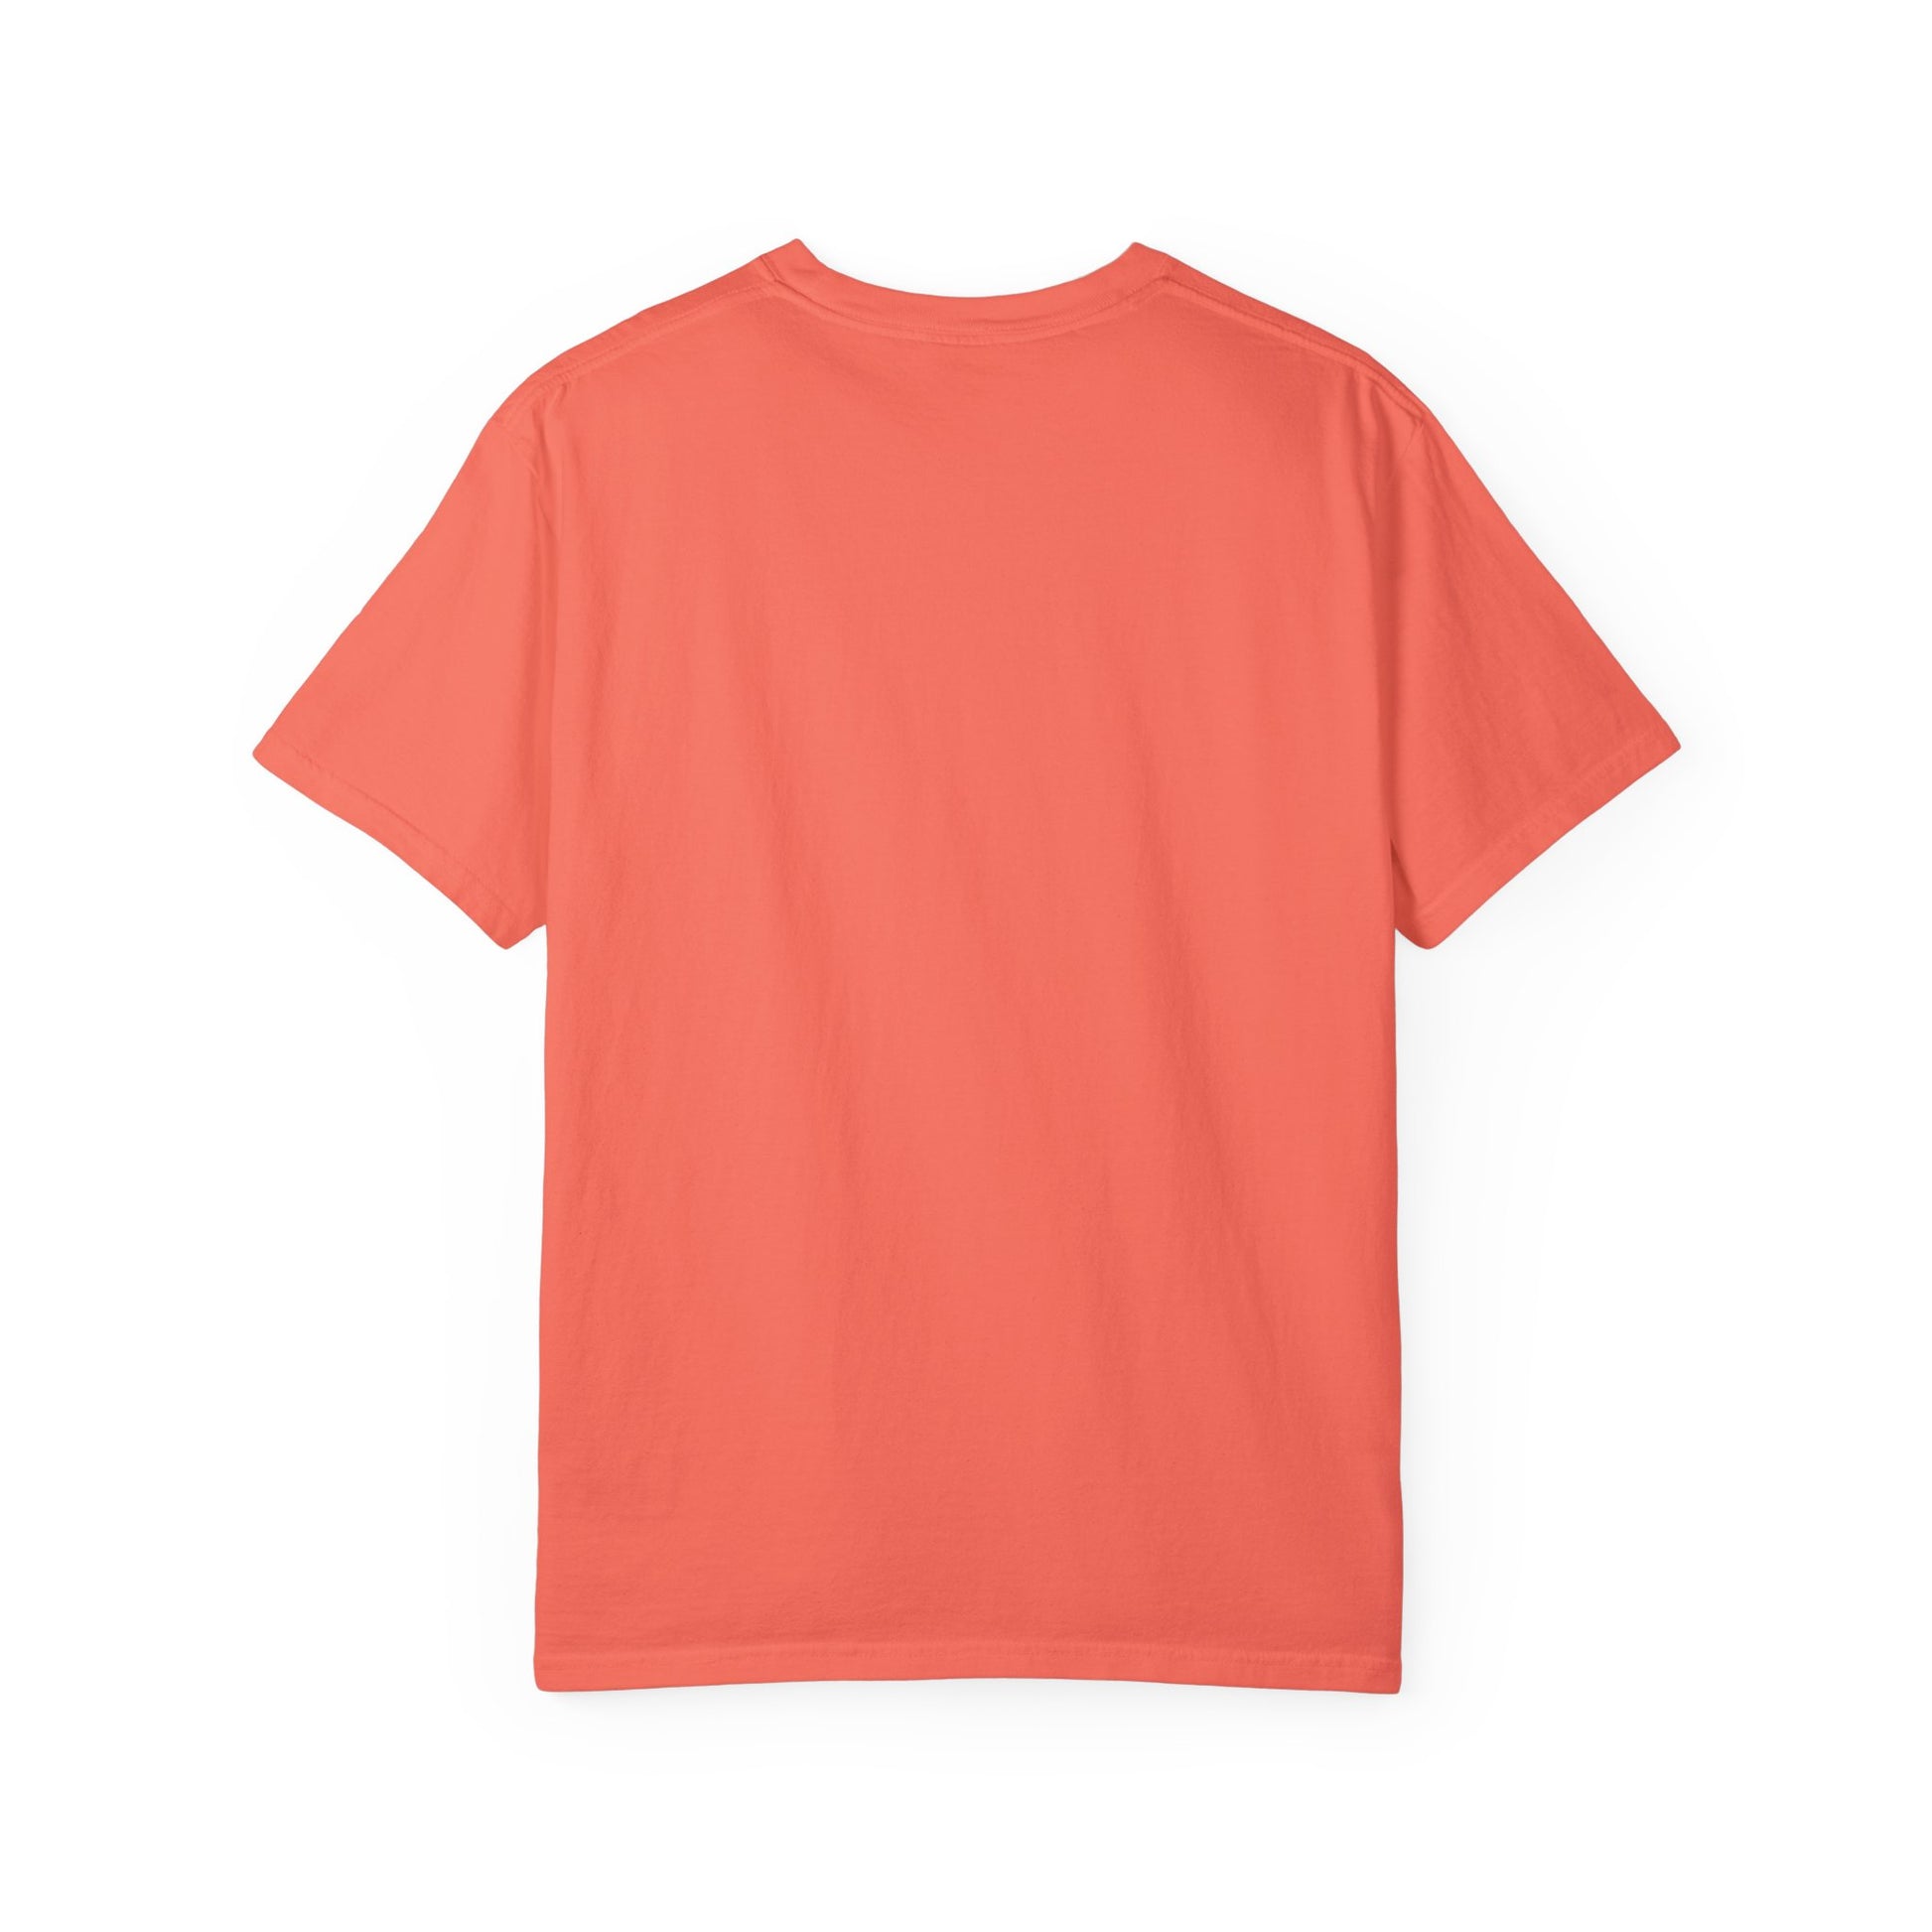 Lion Head Cool Graphic Design Novelty Unisex Garment-dyed T-shirt Cotton Funny Humorous Graphic Soft Premium Unisex Men Women Bright Salmon T-shirt Birthday Gift-31